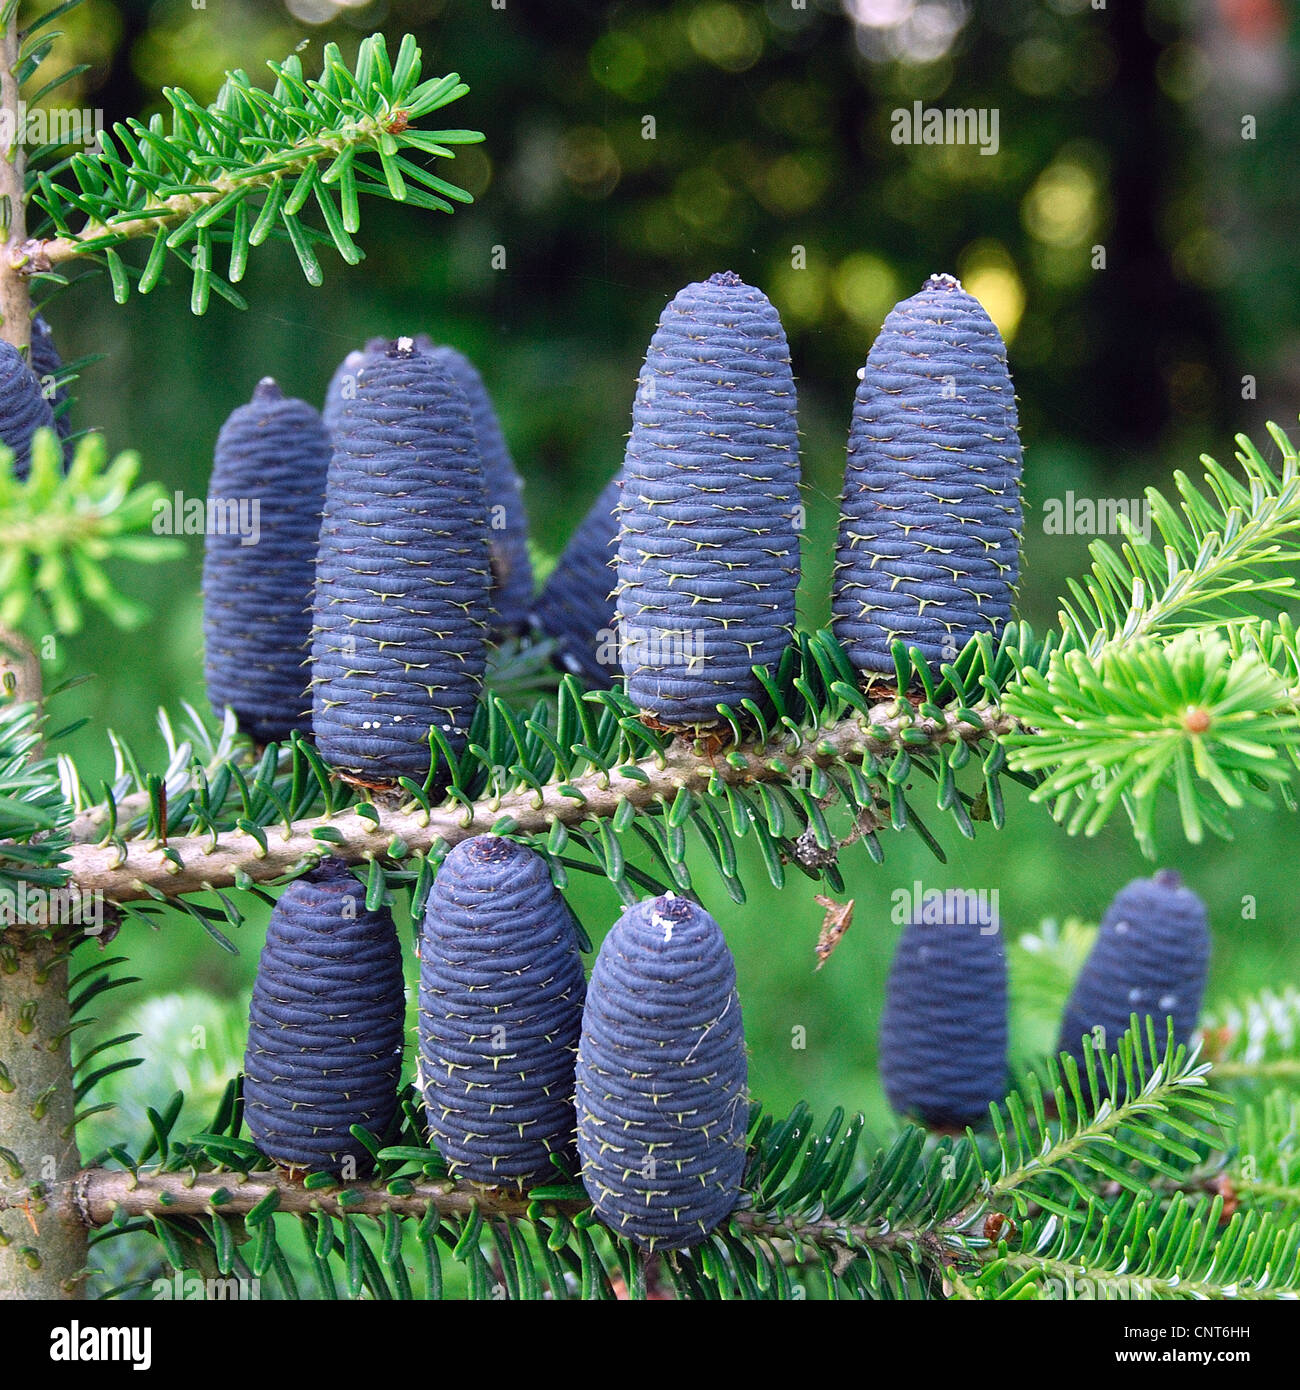 Korean fir (Abies koreana), cones on a branch Stock Photo